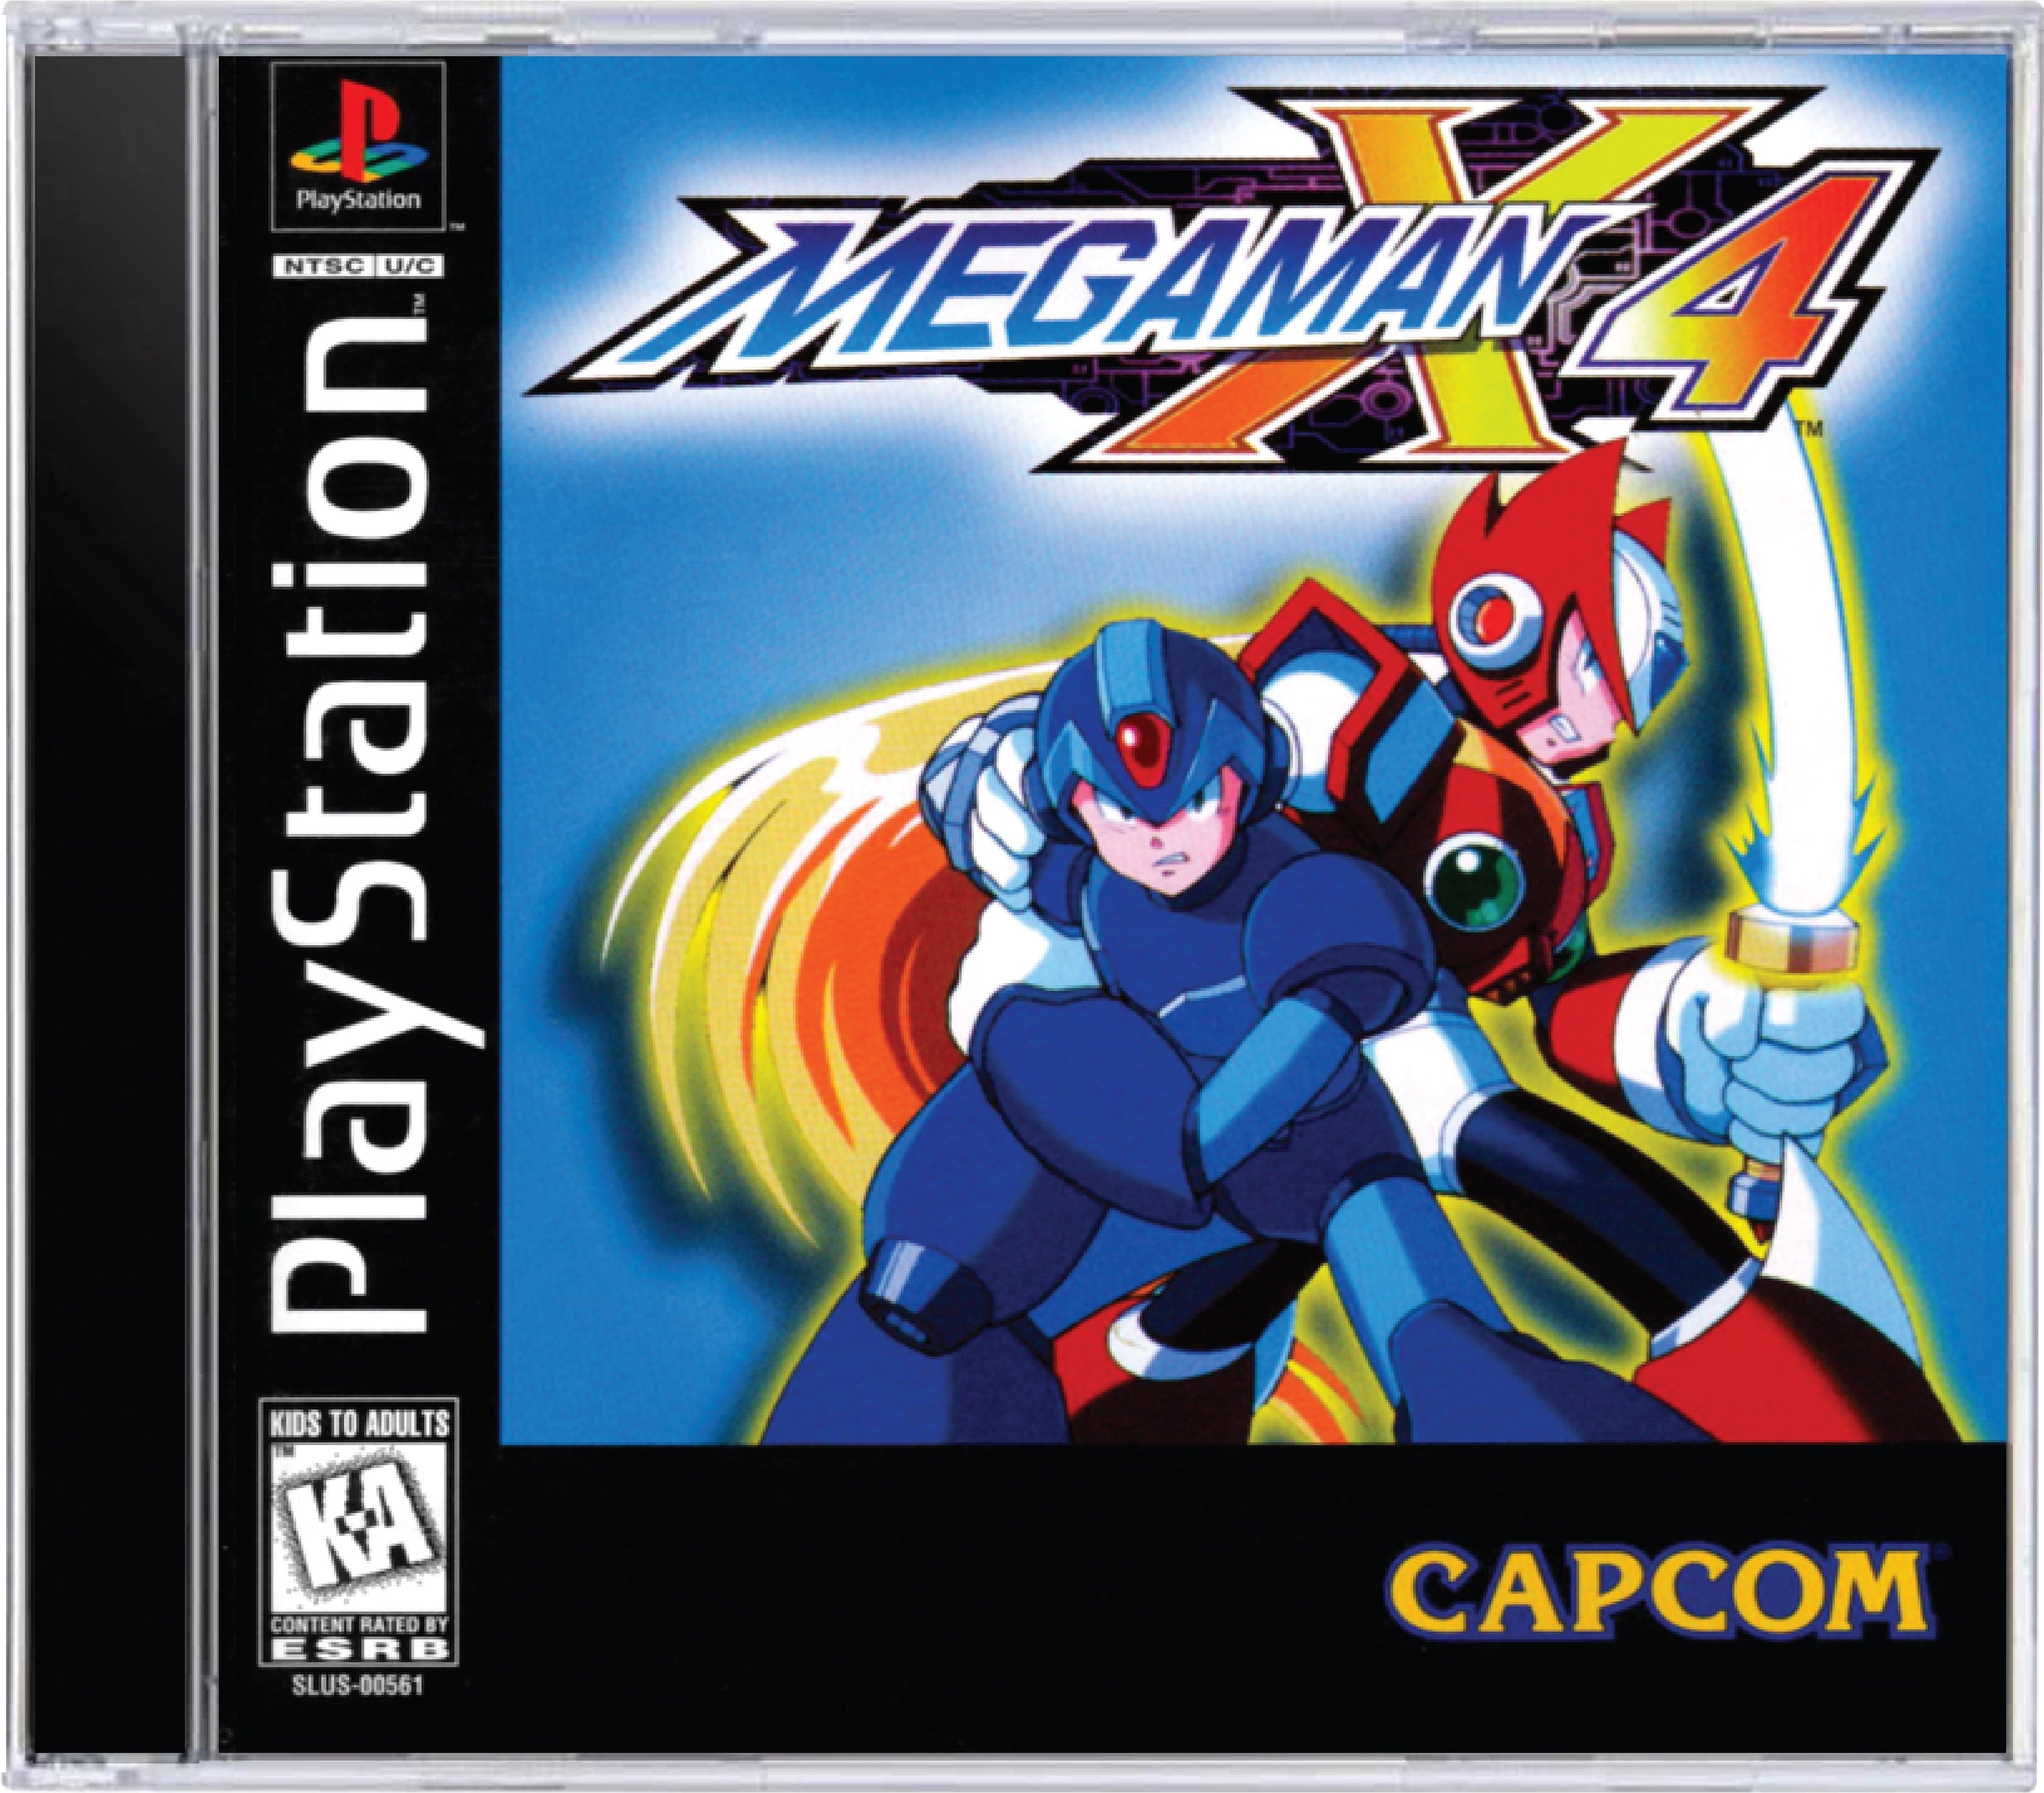 Mega Man X4 Cover Art and Product Photo